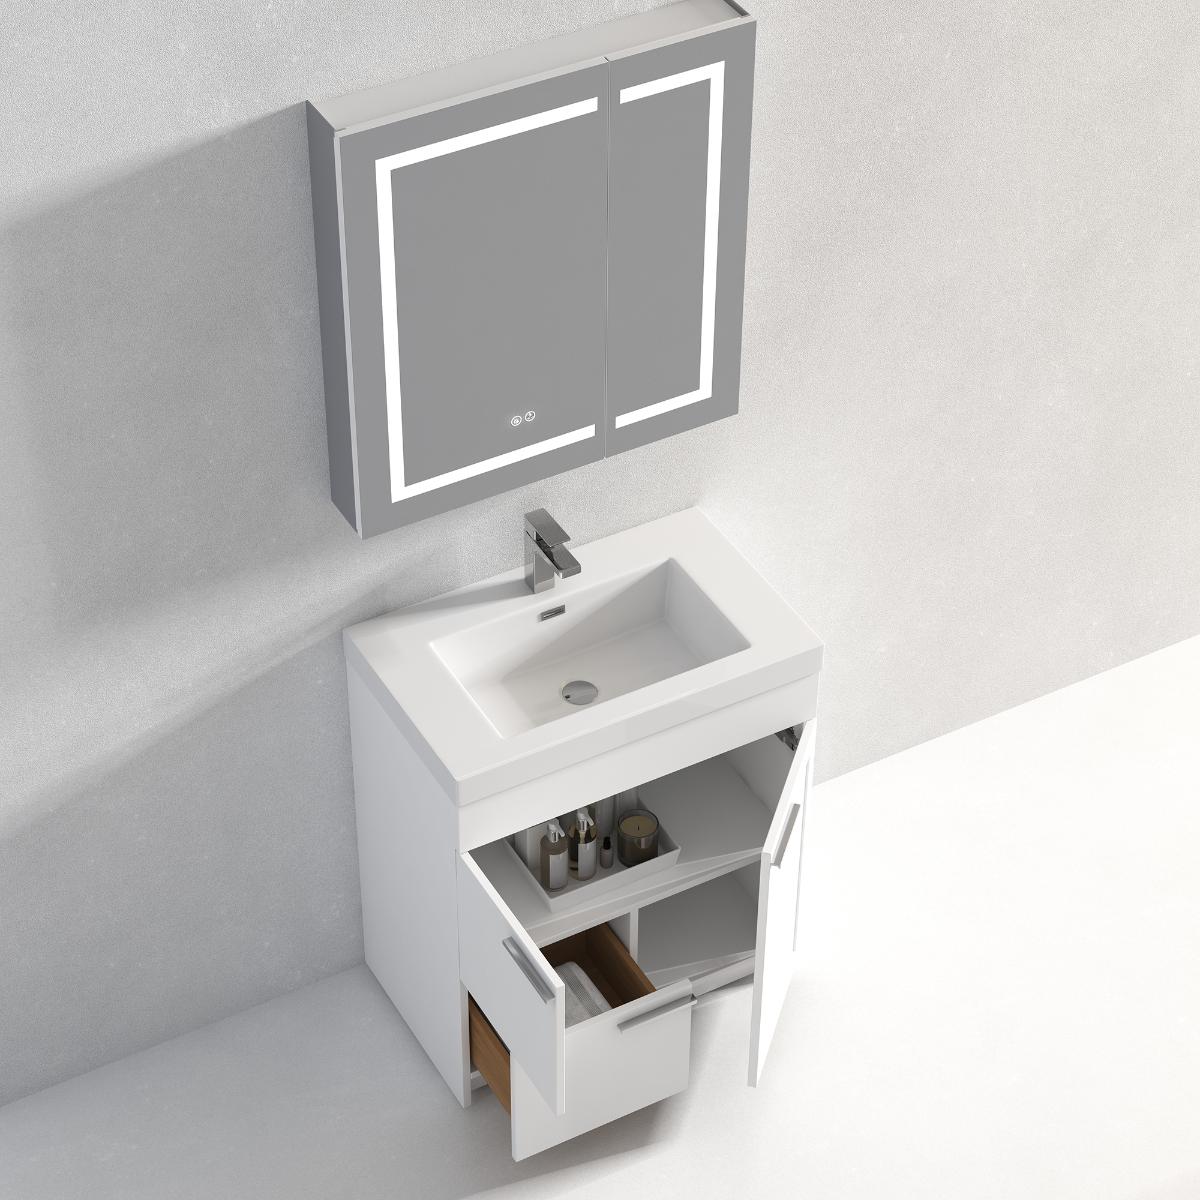 Hanover 30" Bathroom Vanity  #size_30"  #color_matte white